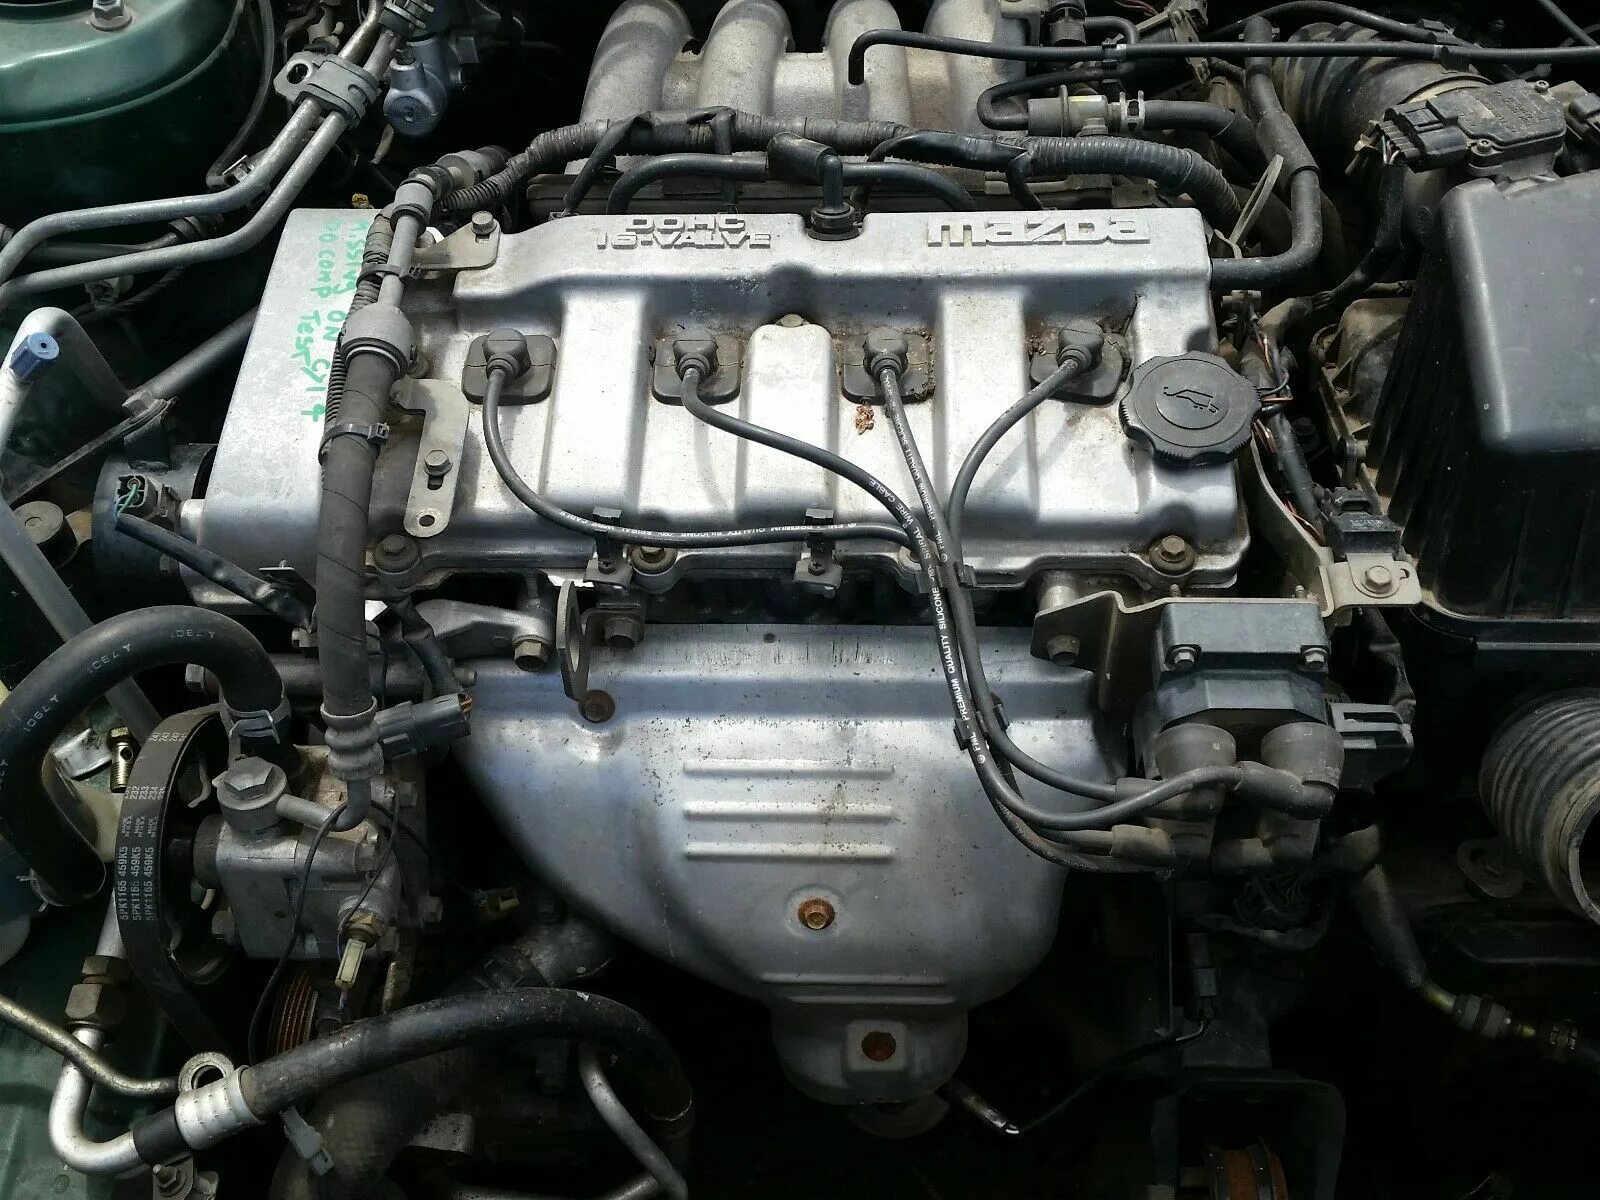 Мазда 626 мотор 2.0. Мазда 626 ge мотор. Мазда 626 gf 1.8 мотор. Двигатель Мазда 626 ge 2.0 бензин.